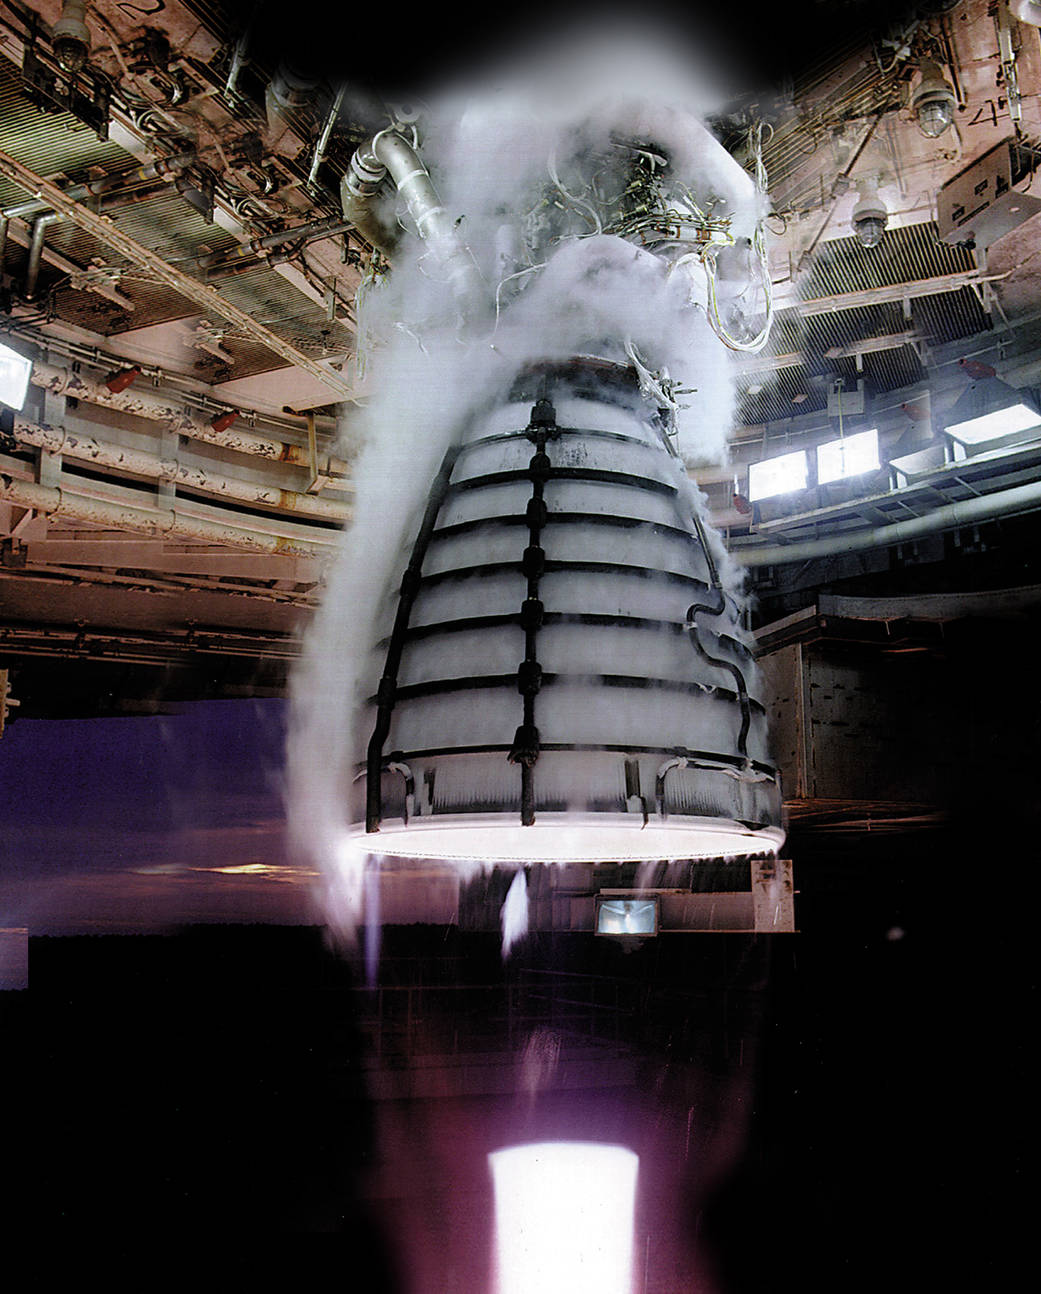 An RS-25 engine undergoes a hot-fire test.